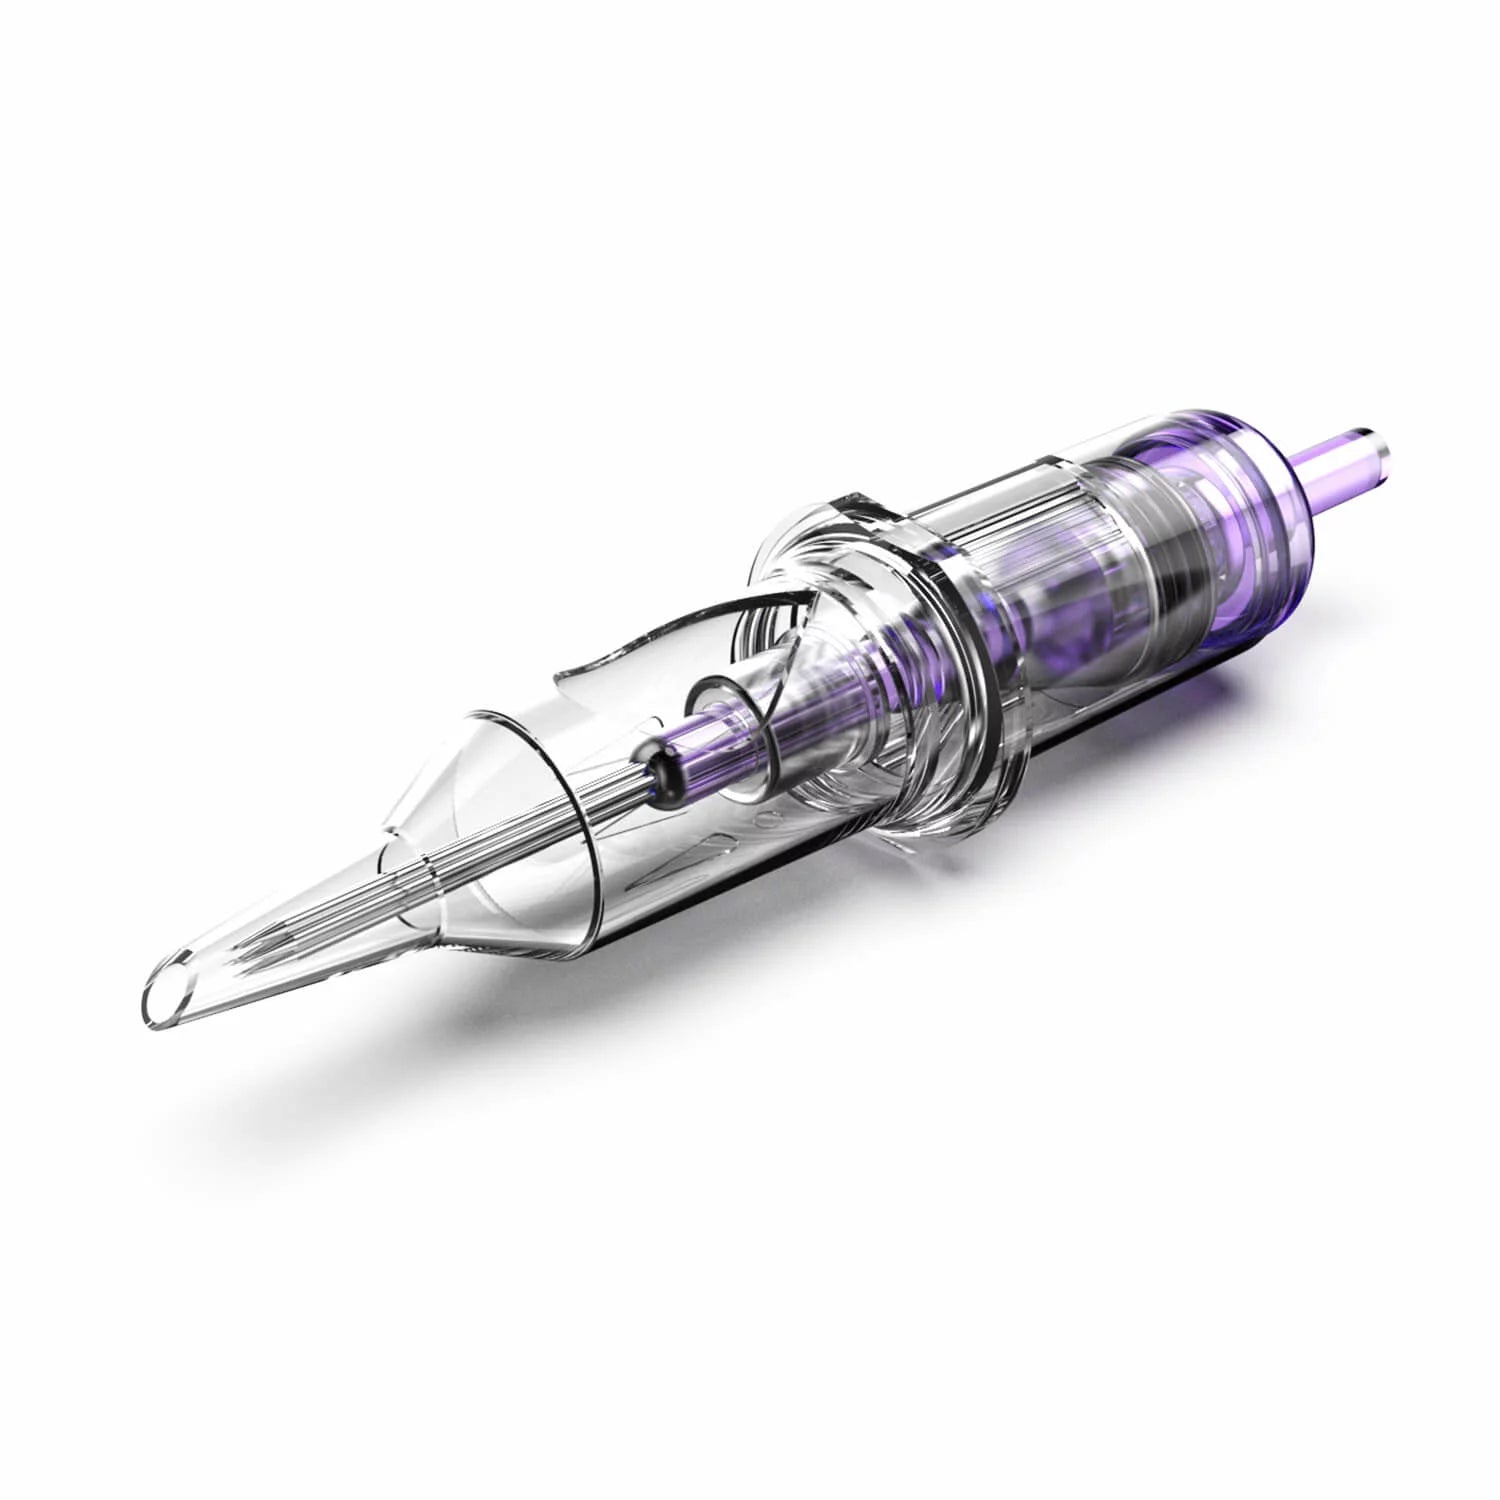 Denergy® 0.35mm RL Premium Tattoo Needle Cartridges 20PCS - Discover Device